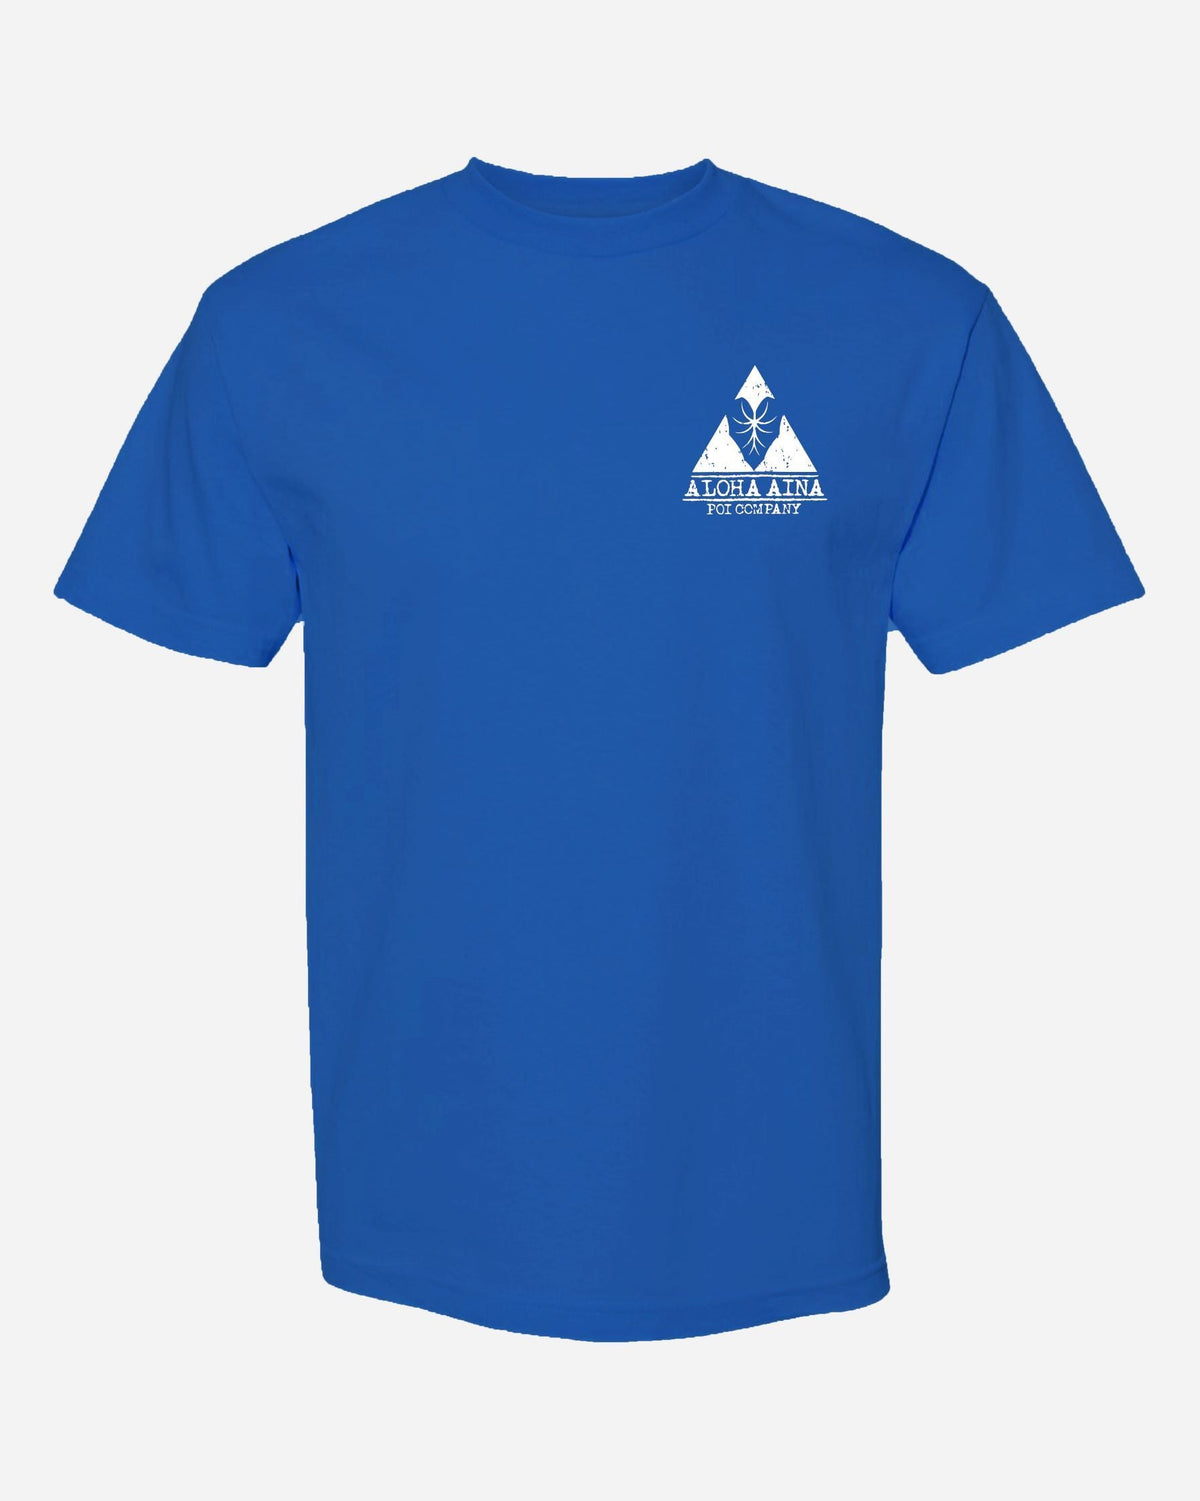 Pop-Up Mākeke - Aloha Aina Poi Co. - Mauka Logo Men&#39;s Short Sleeve T-Shirt - Blue - Front View